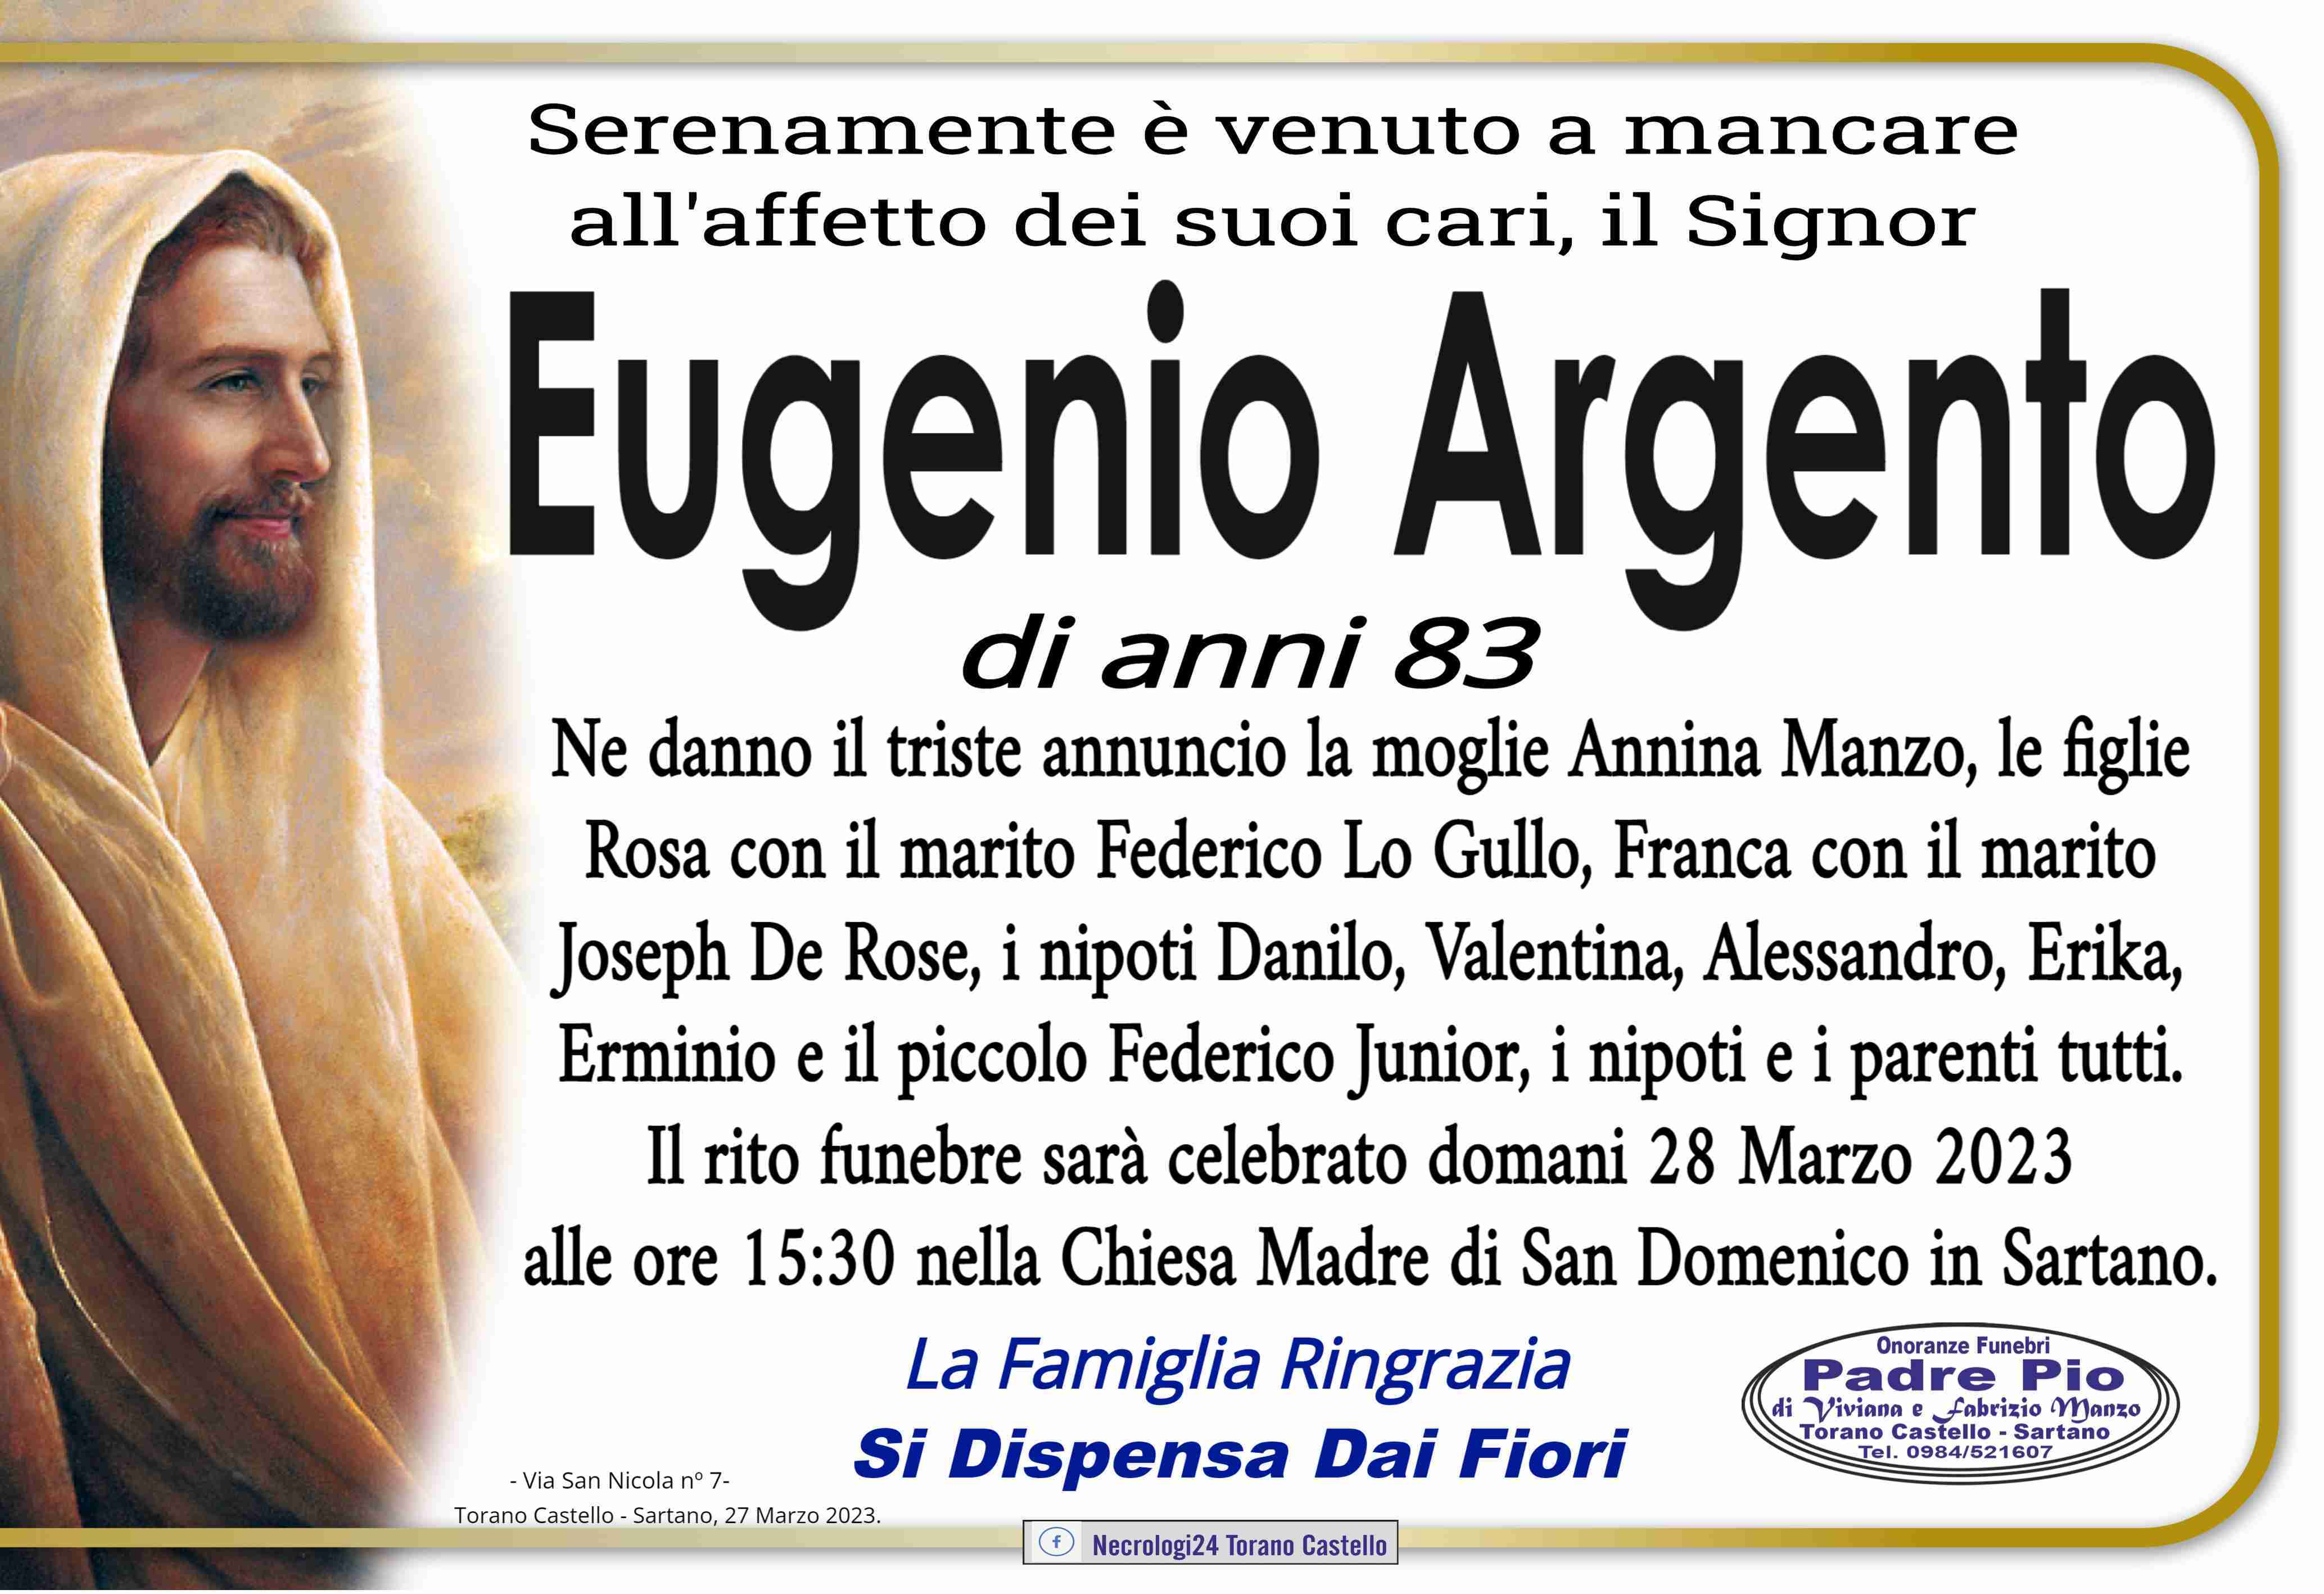 Eugenio Argento